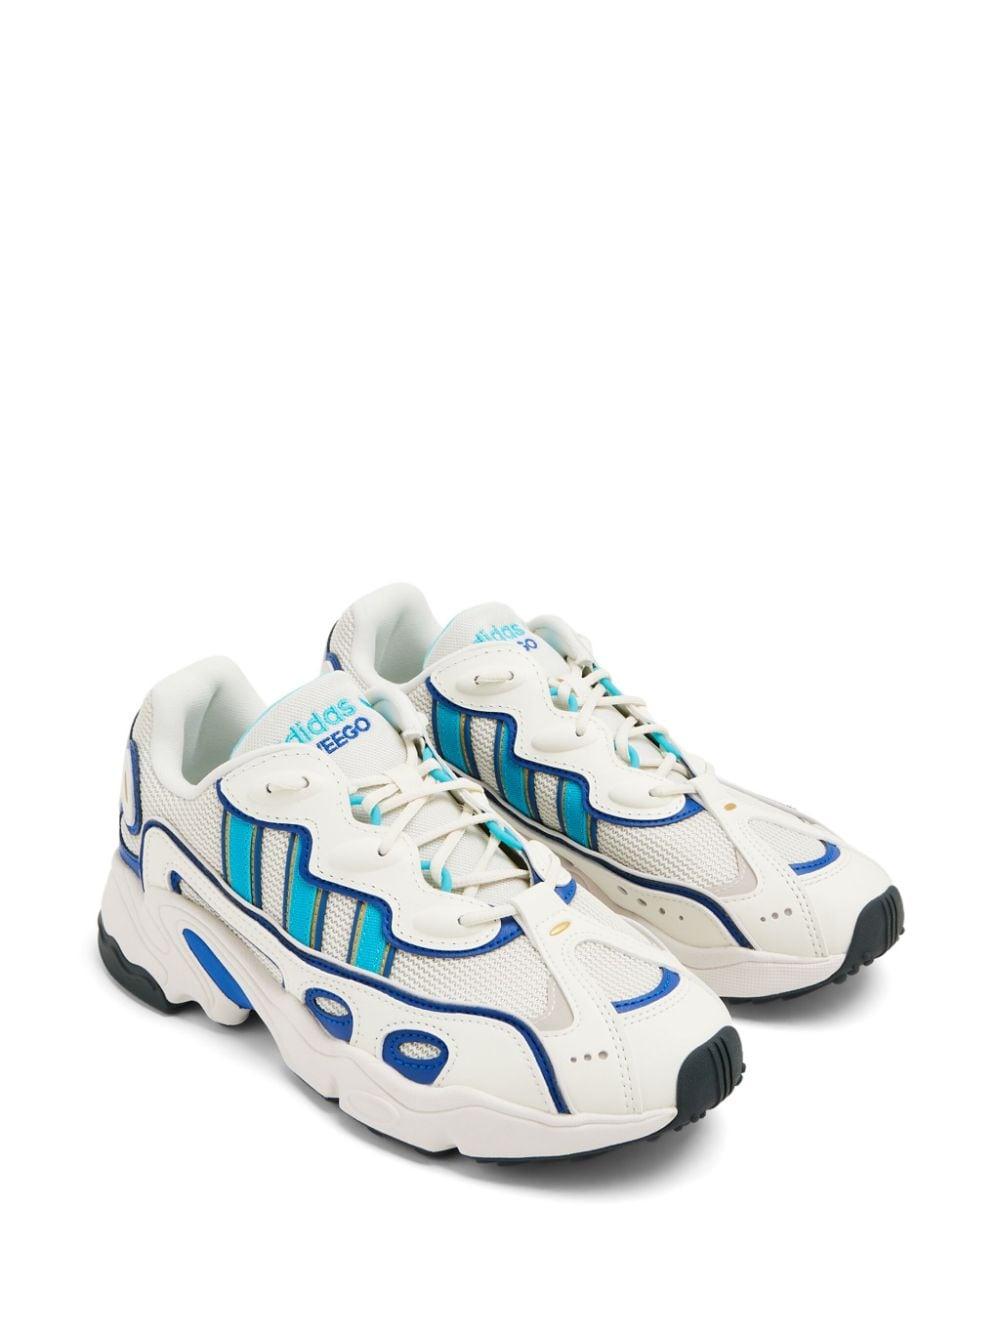 adidas Ozweego W Mesh Sneakers in Blue | Lyst